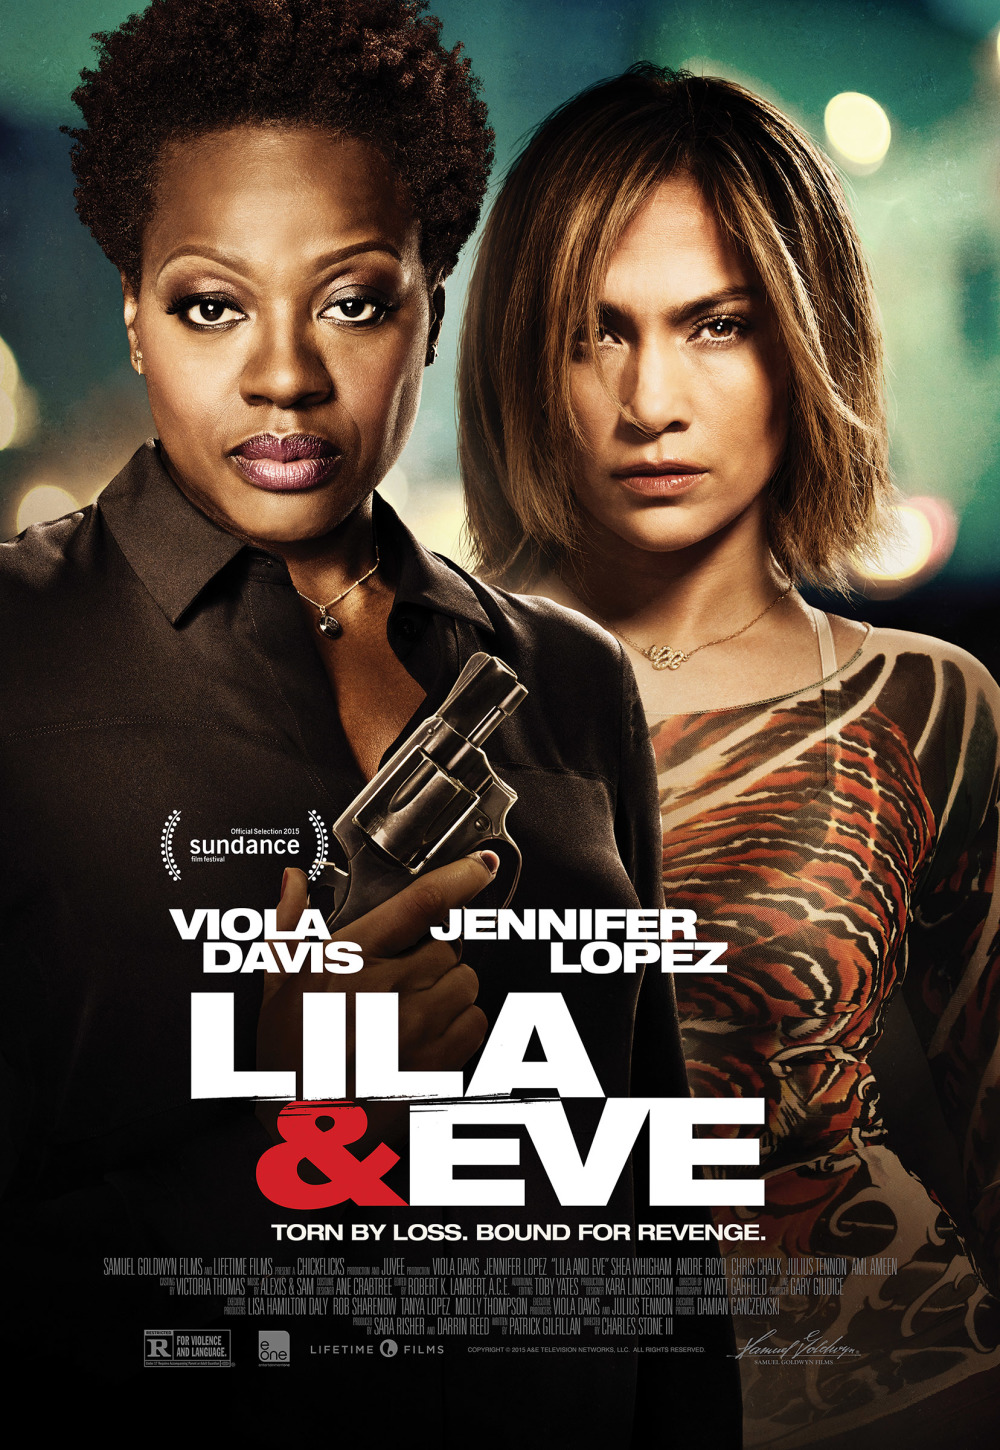 Trailer 'Lila & Eve' met Viola Davis en Jennifer Lopez